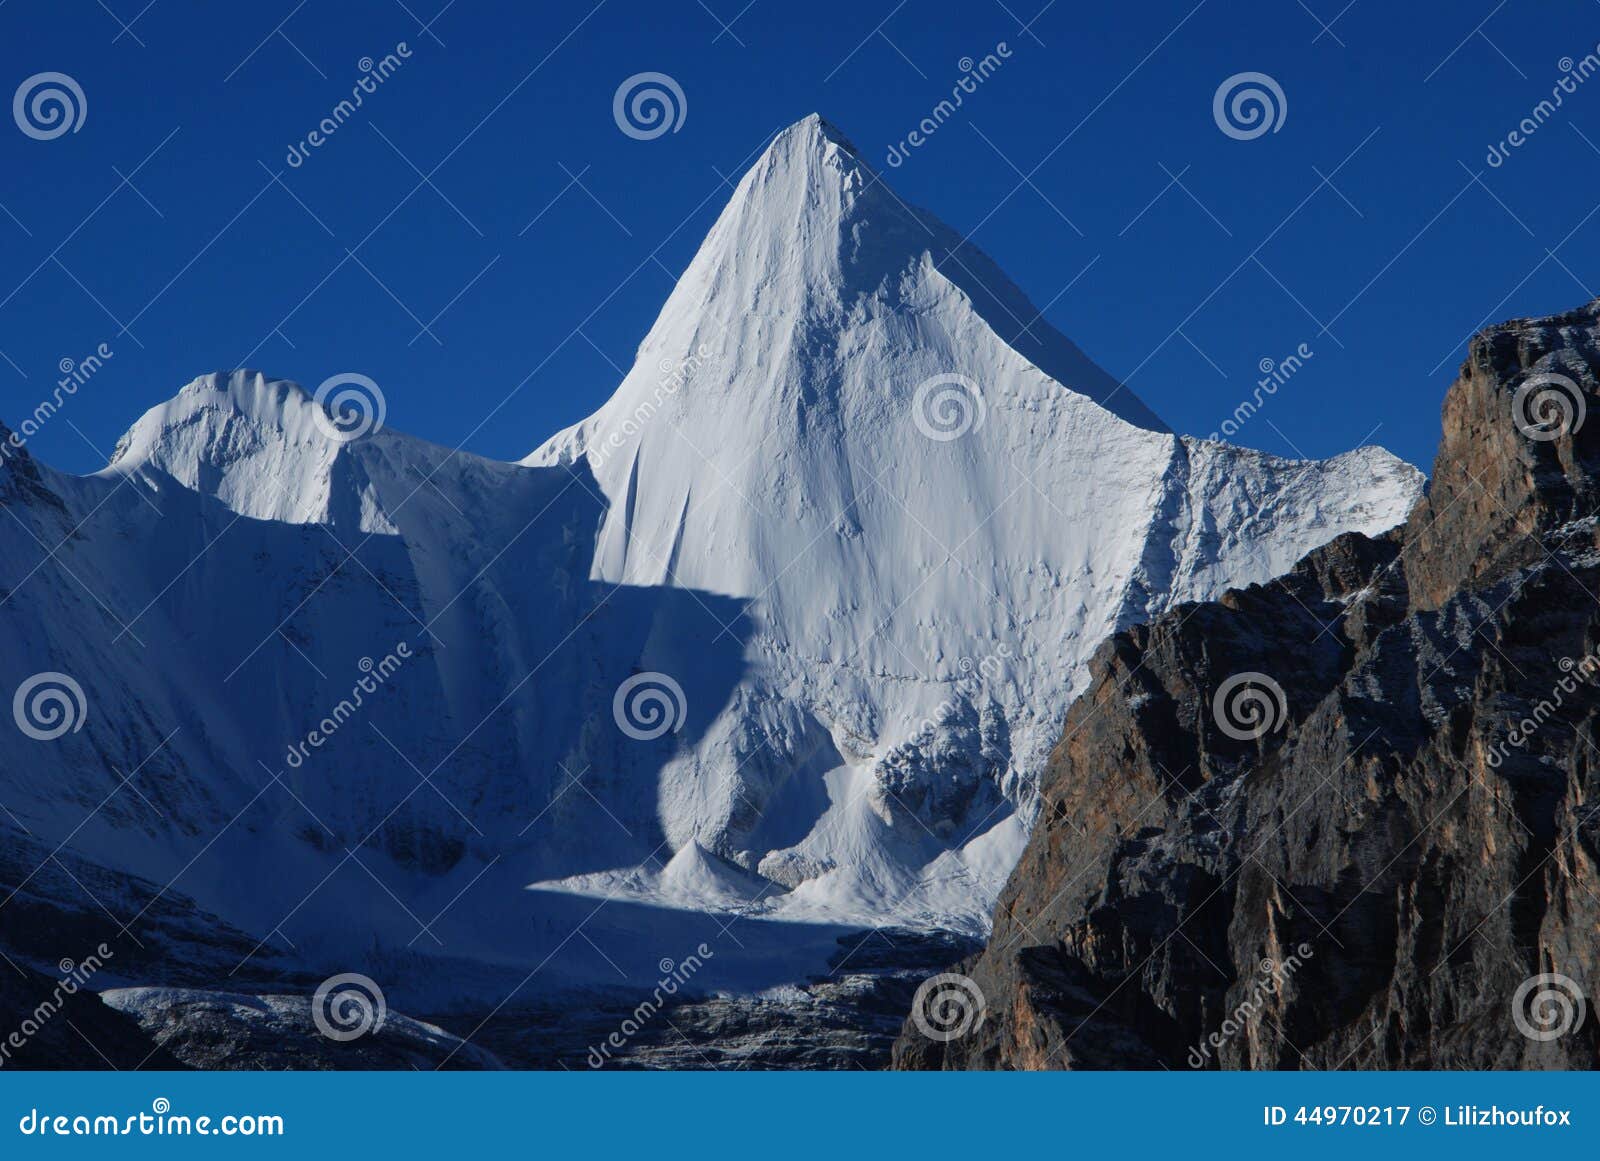 the snow mountain of konka risumgongba